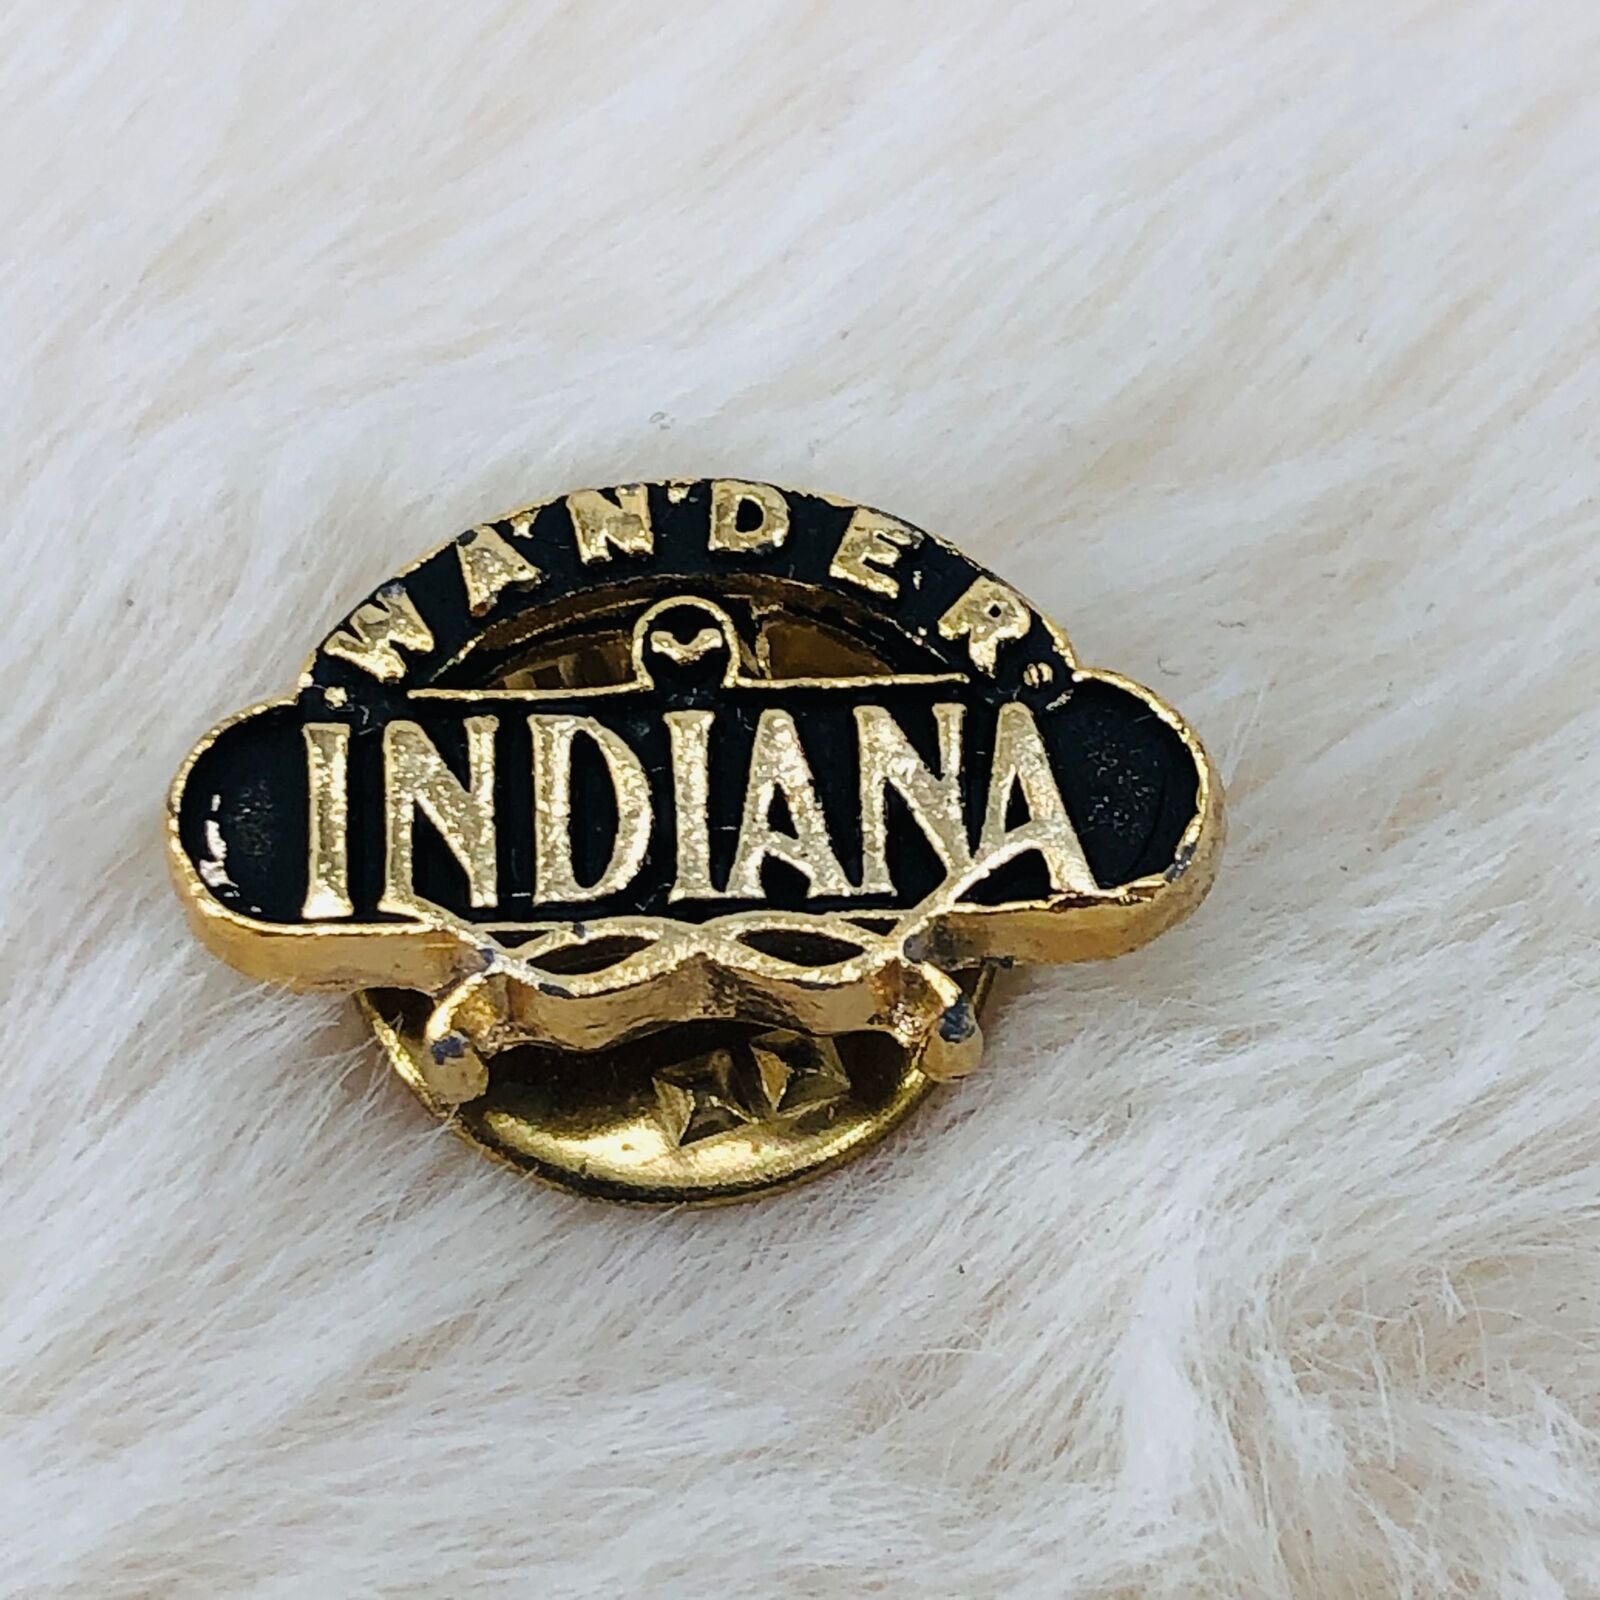 Vtg 80s Wander Indiana Souvenir Gold Tone Travel Campaign Lapel Pin